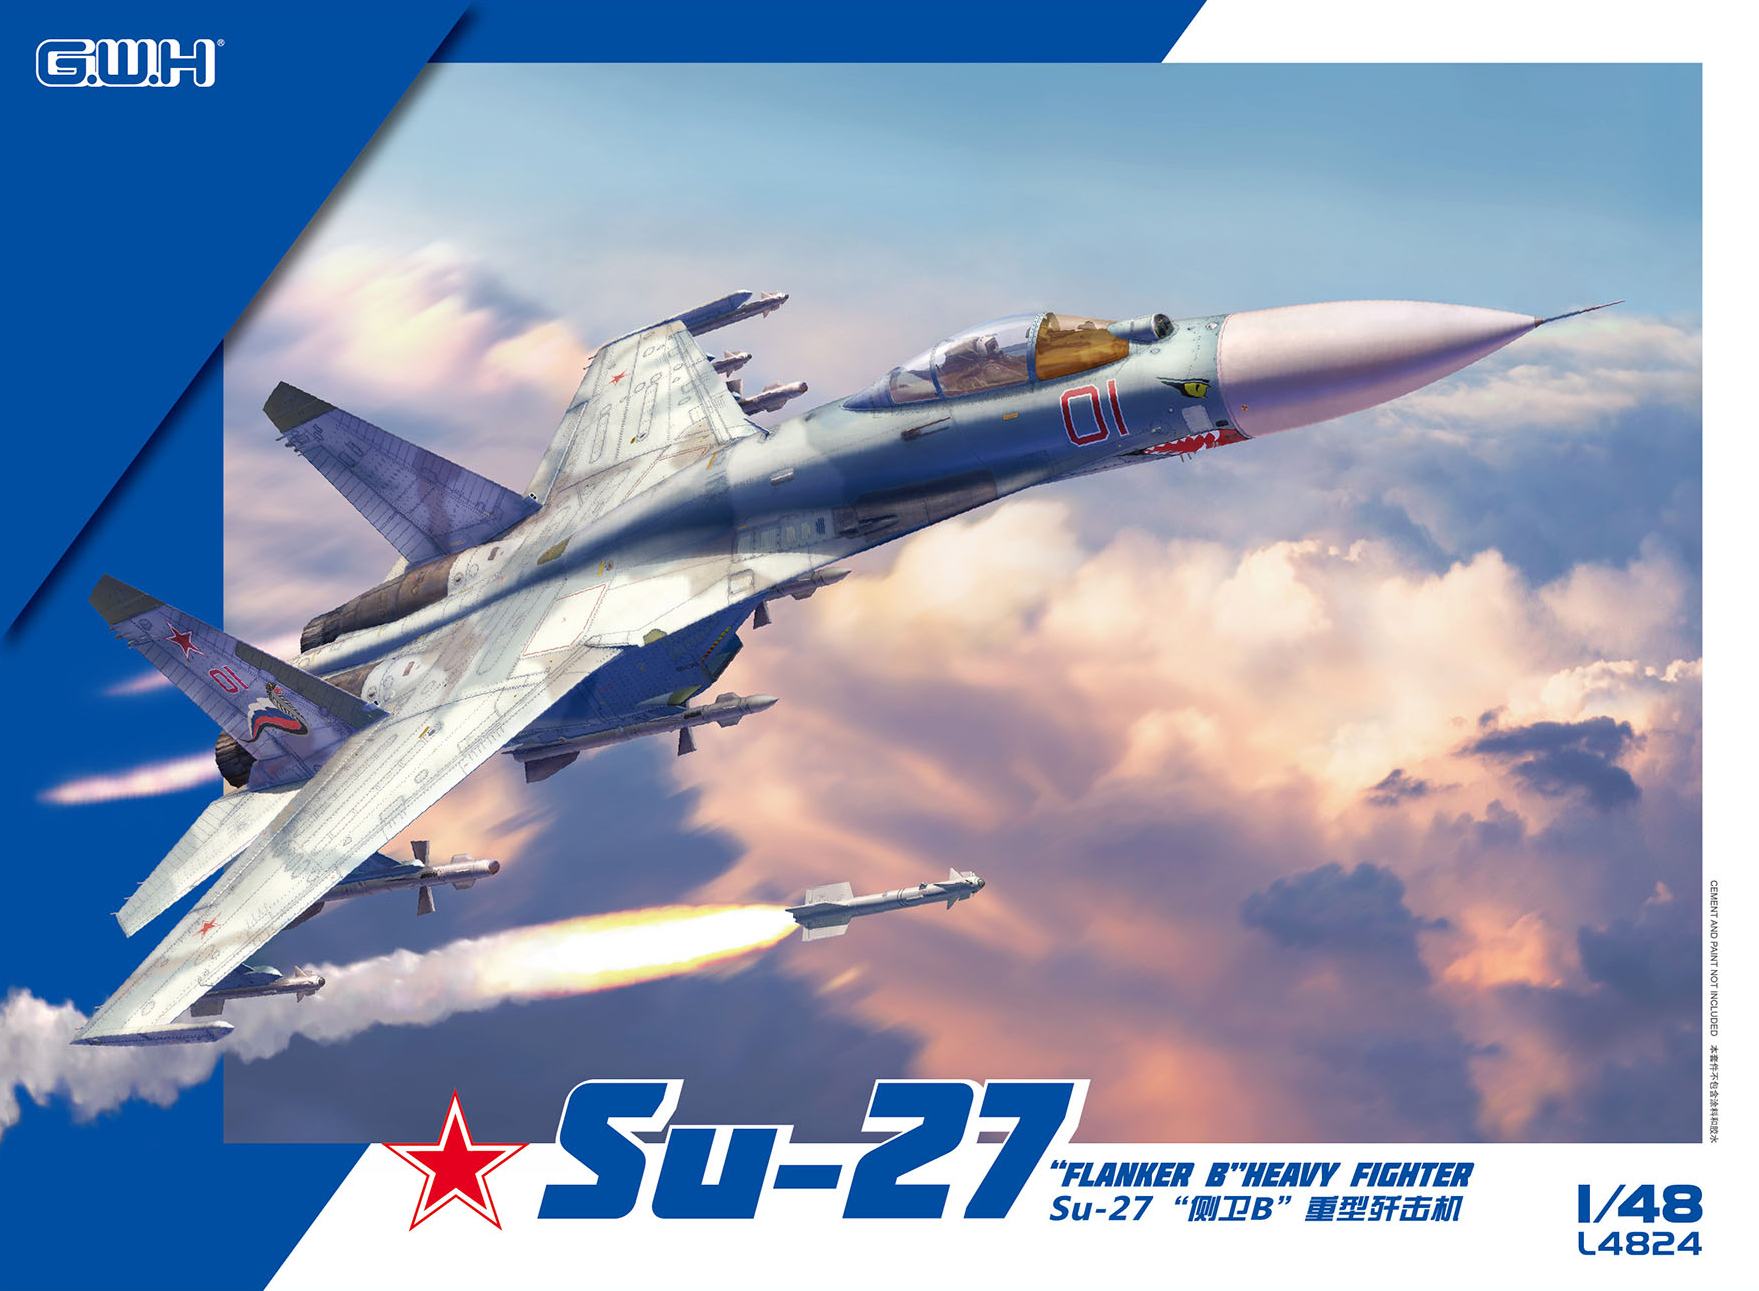 1/48 Su-27 "Flanker B" Heavy Fighter